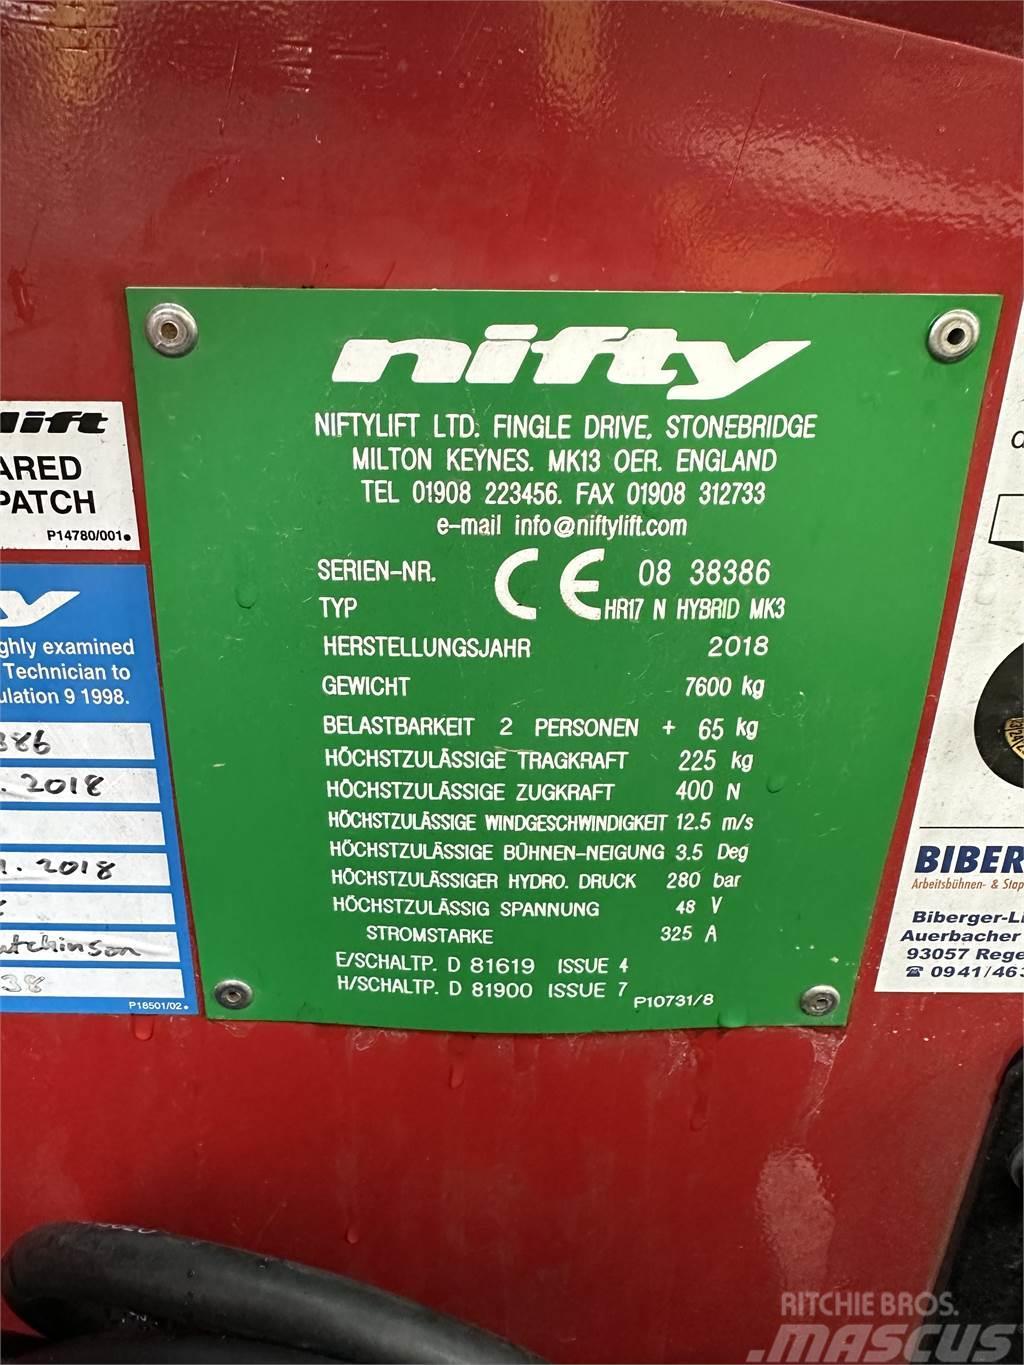 Niftylift HR 17 N HYBRID MK3 Plataforma de trabajo articulada